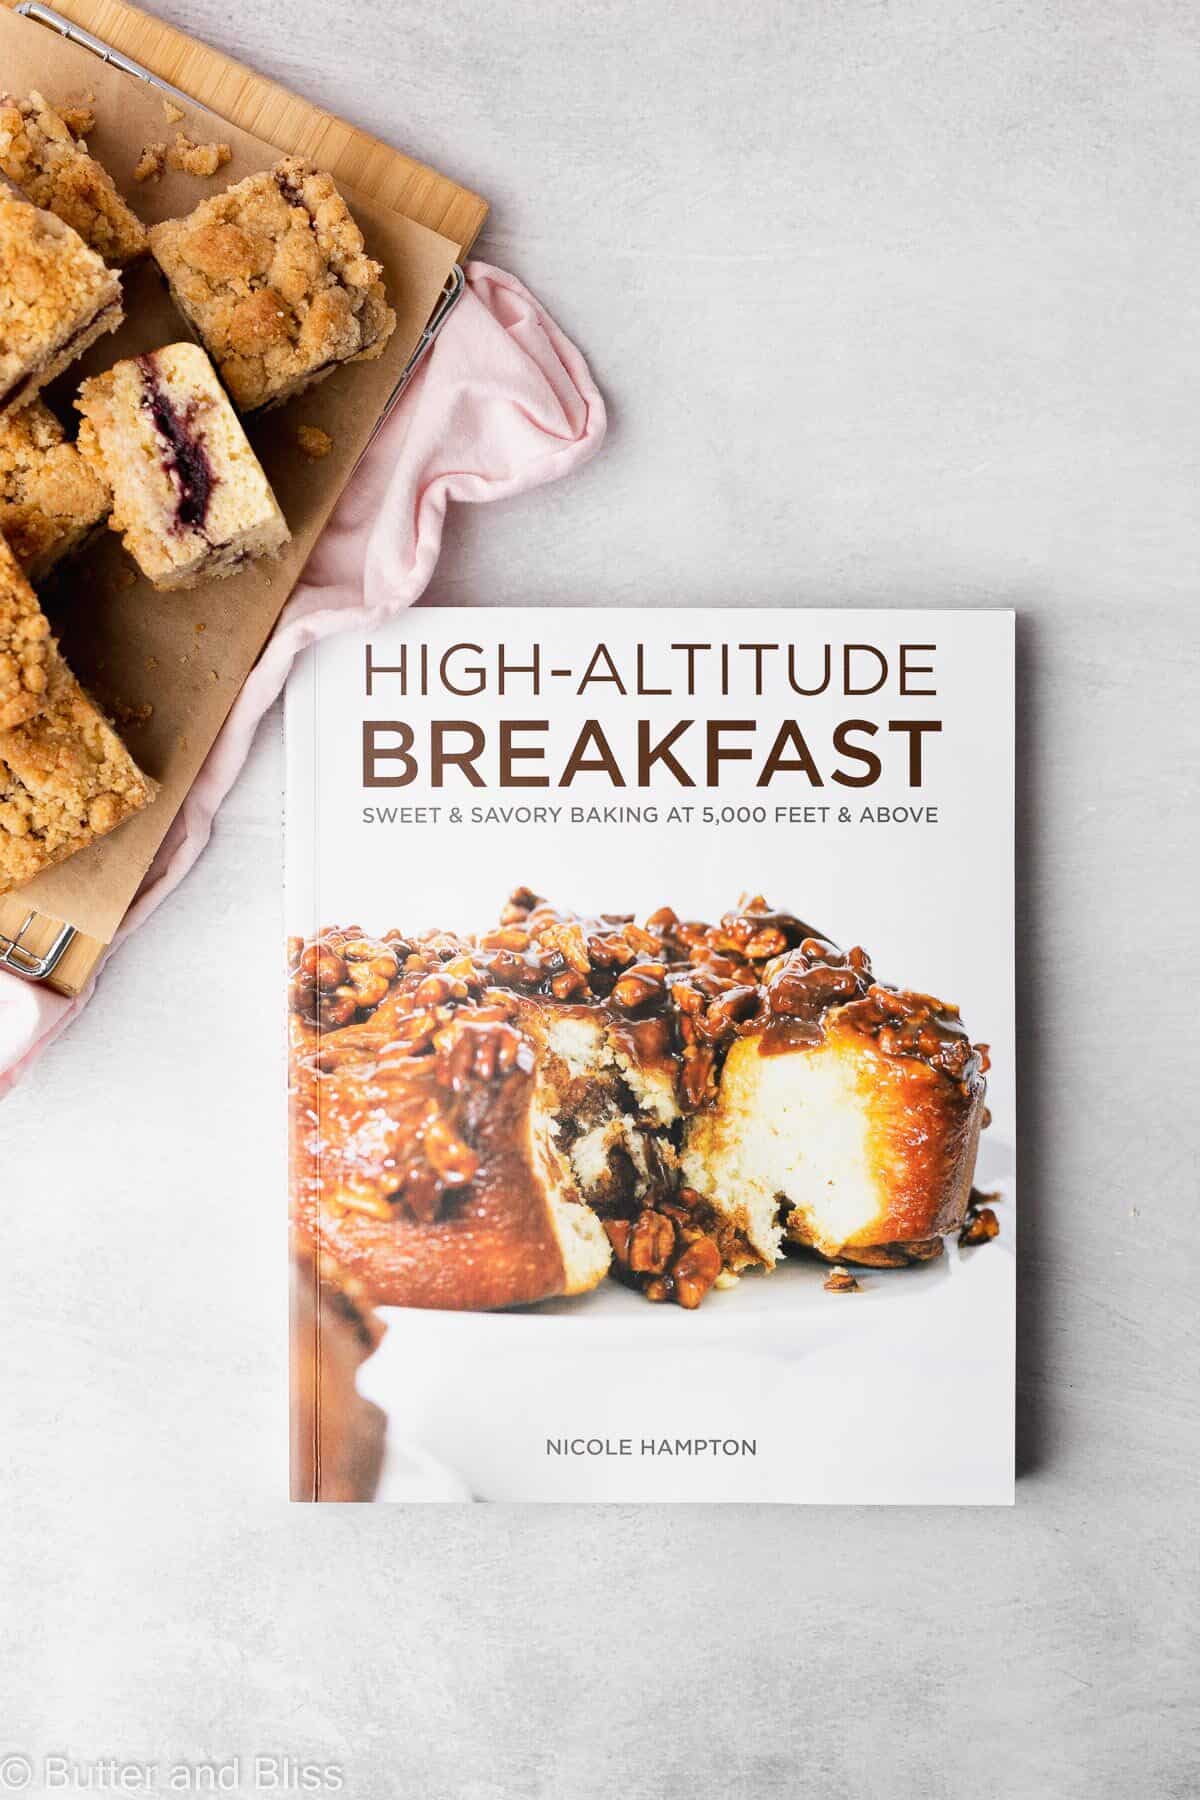 High altitude breakfast cookbook by Nicole Hampton on a table